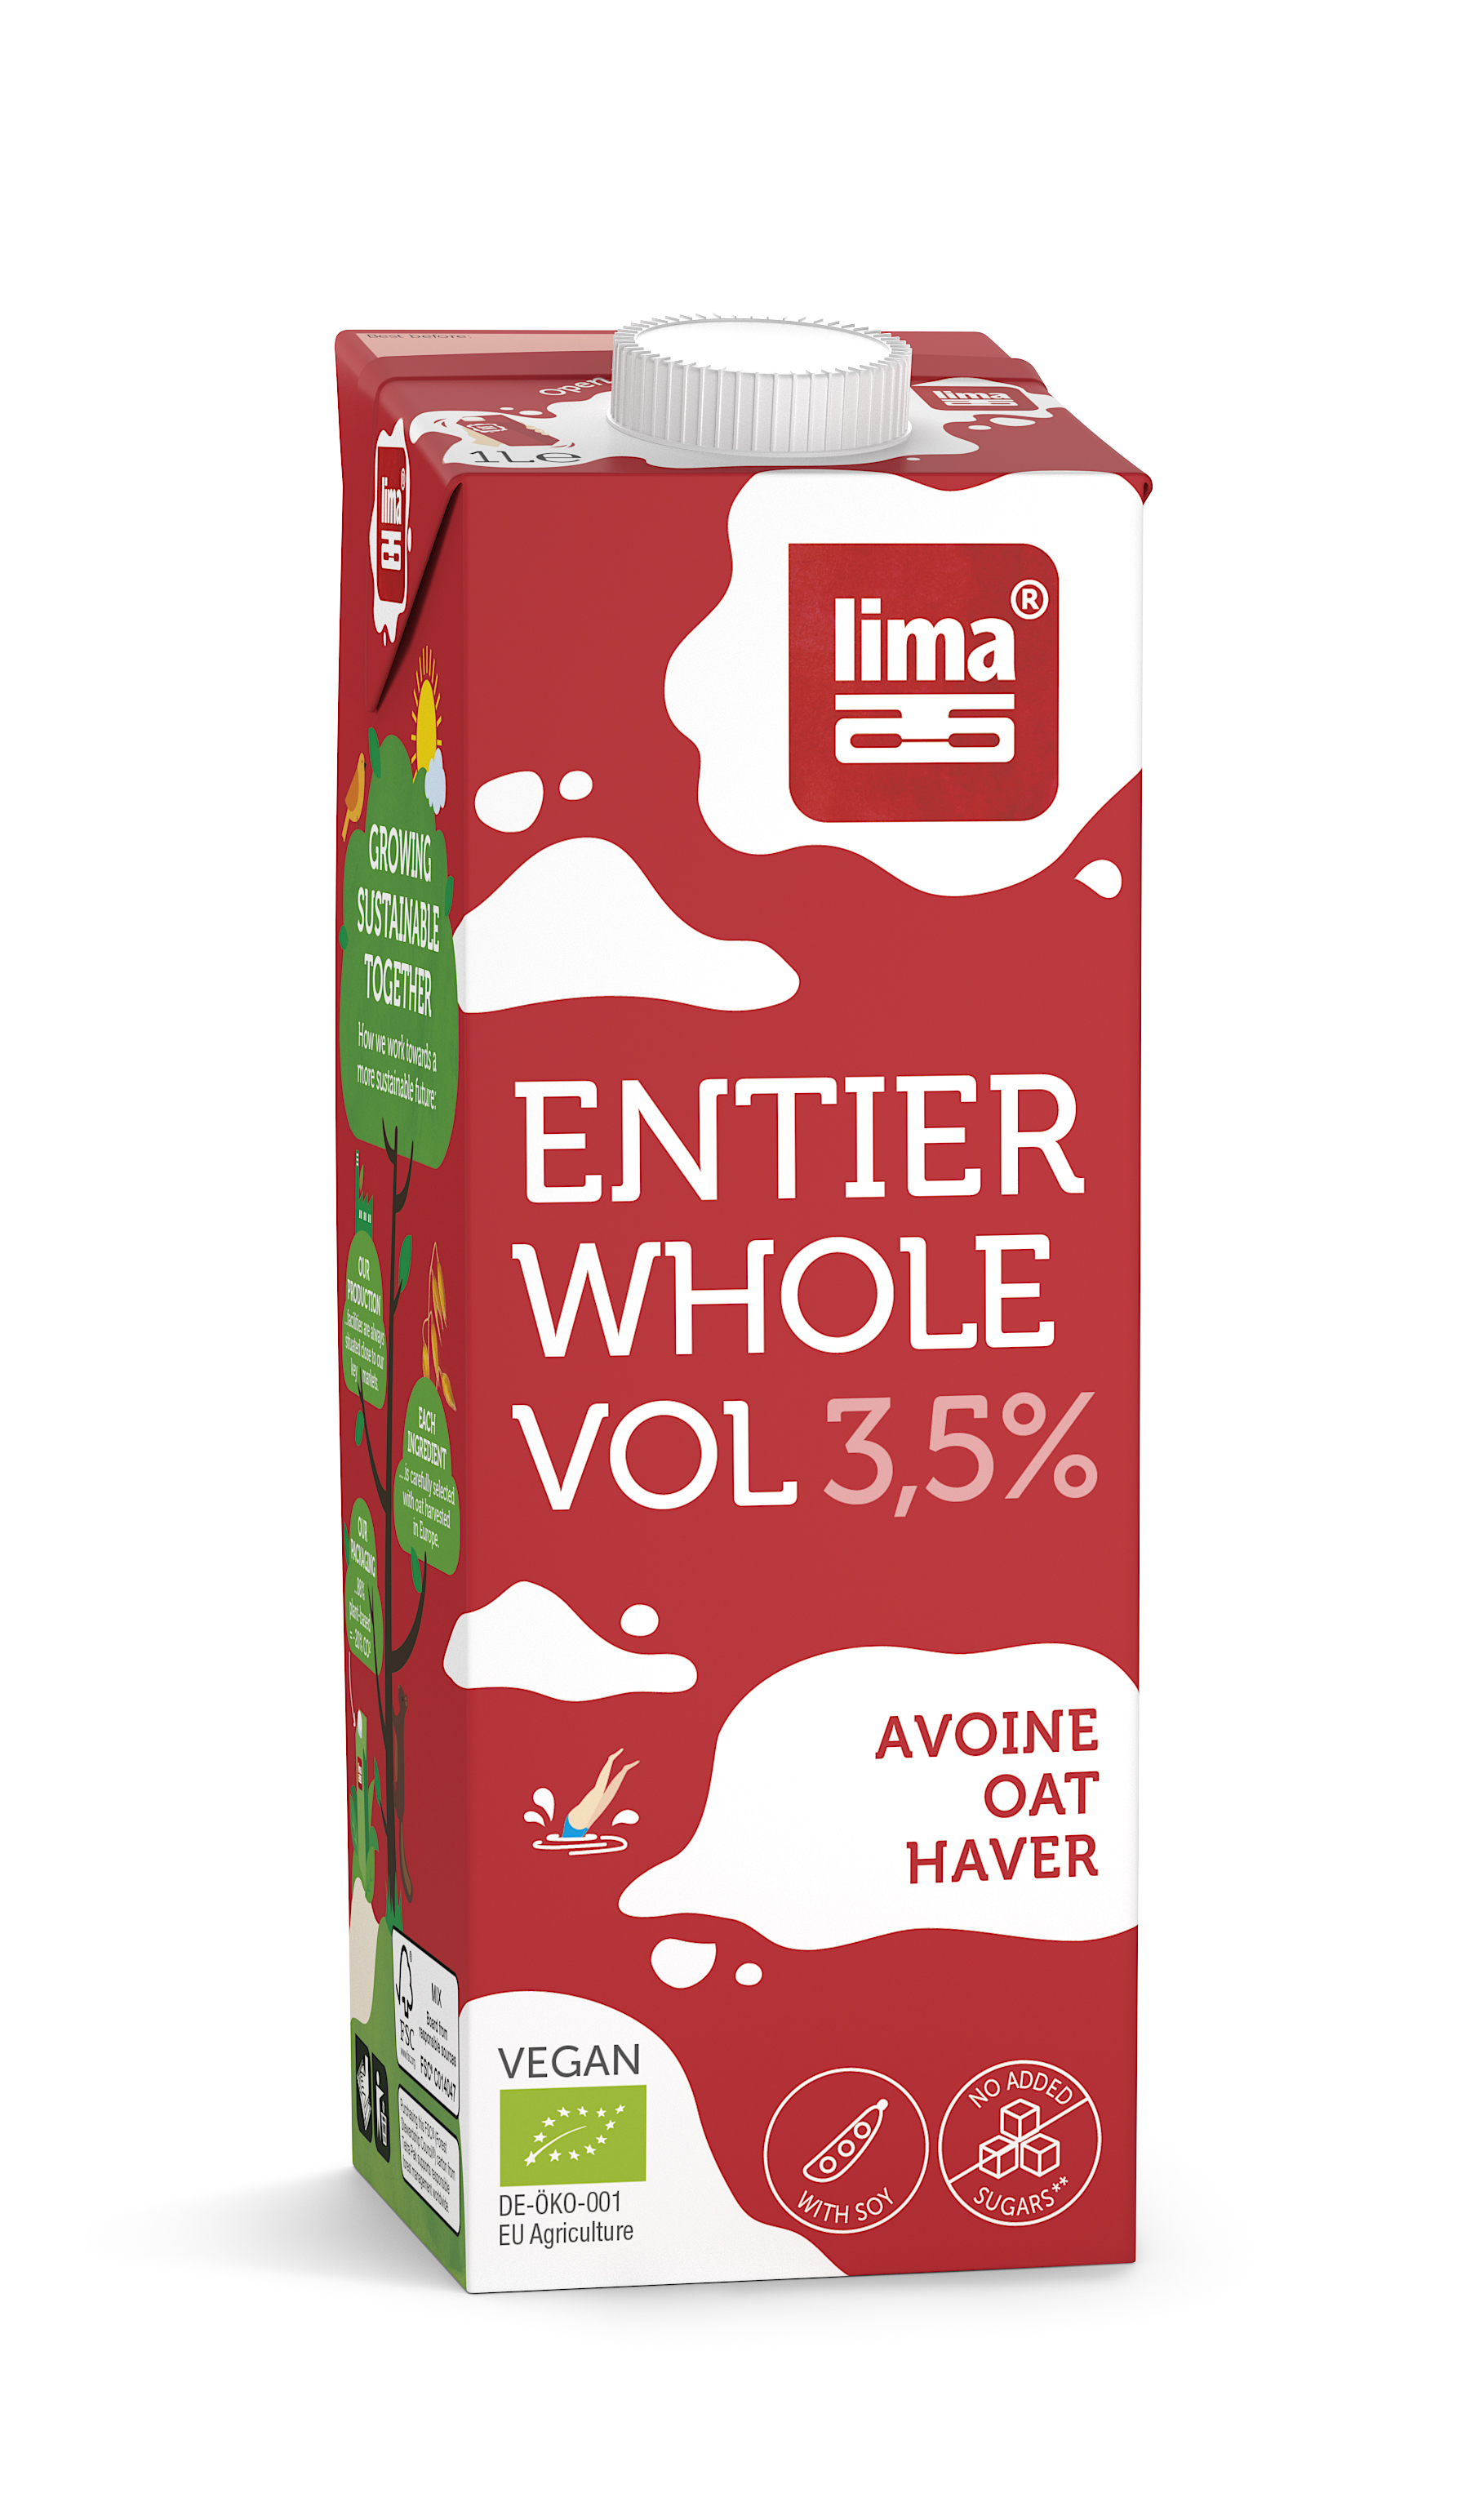 Lima Whole drink(avoine-soja) entier 3.5% bio 1L